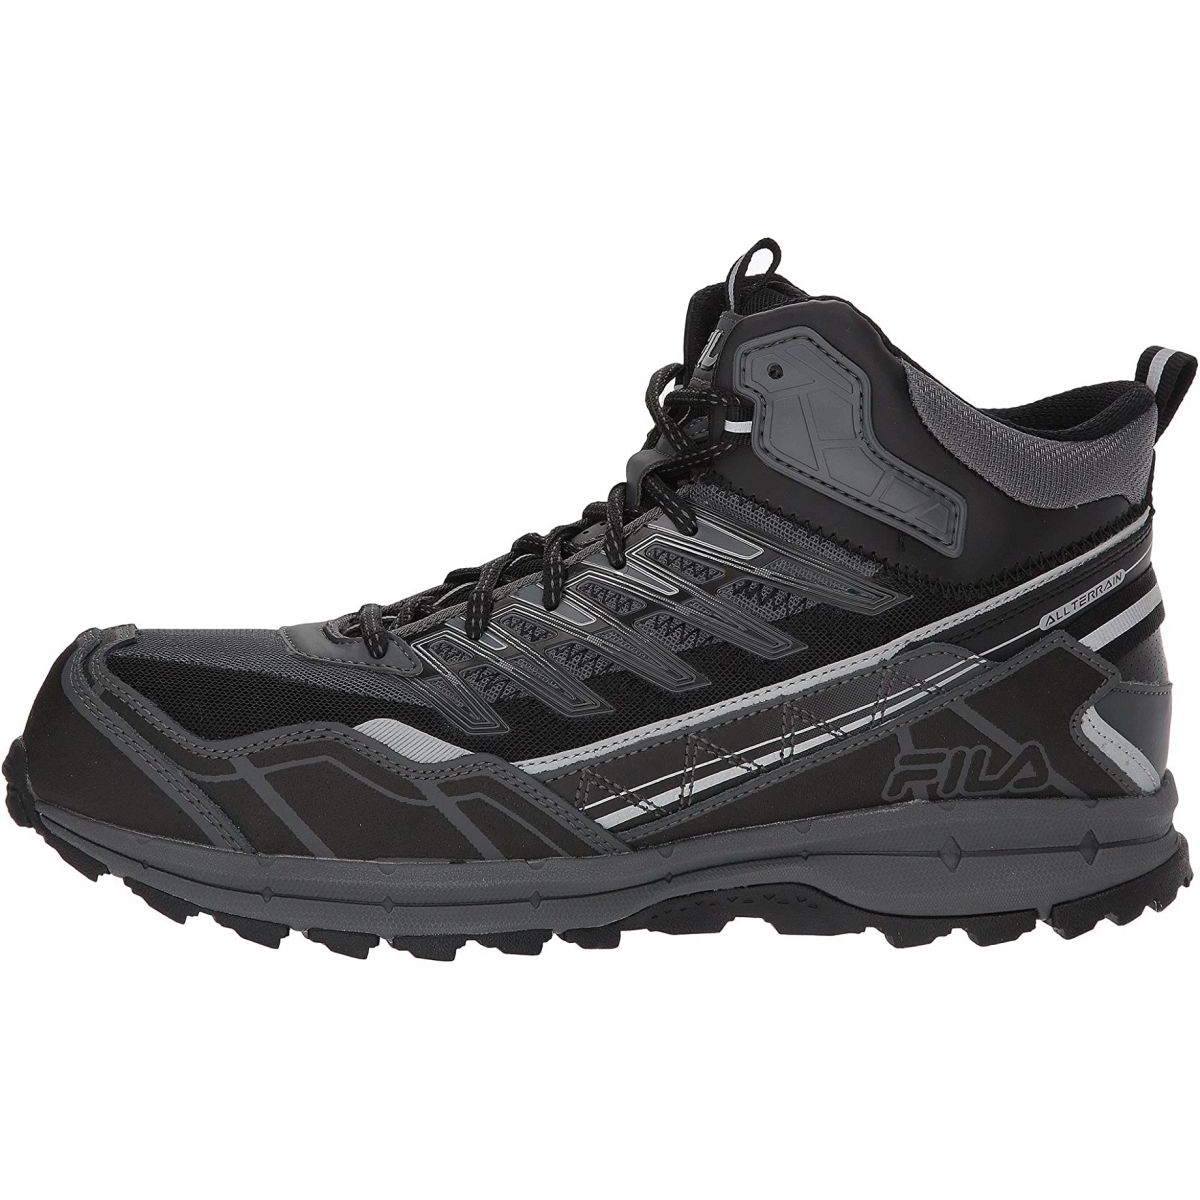 Fila Men's Hail Storm 3 Mid Composite Toe Trail Work Shoes Ct CSRK/BLK/MSIL - CSRK/BLK/MSIL, 7.5